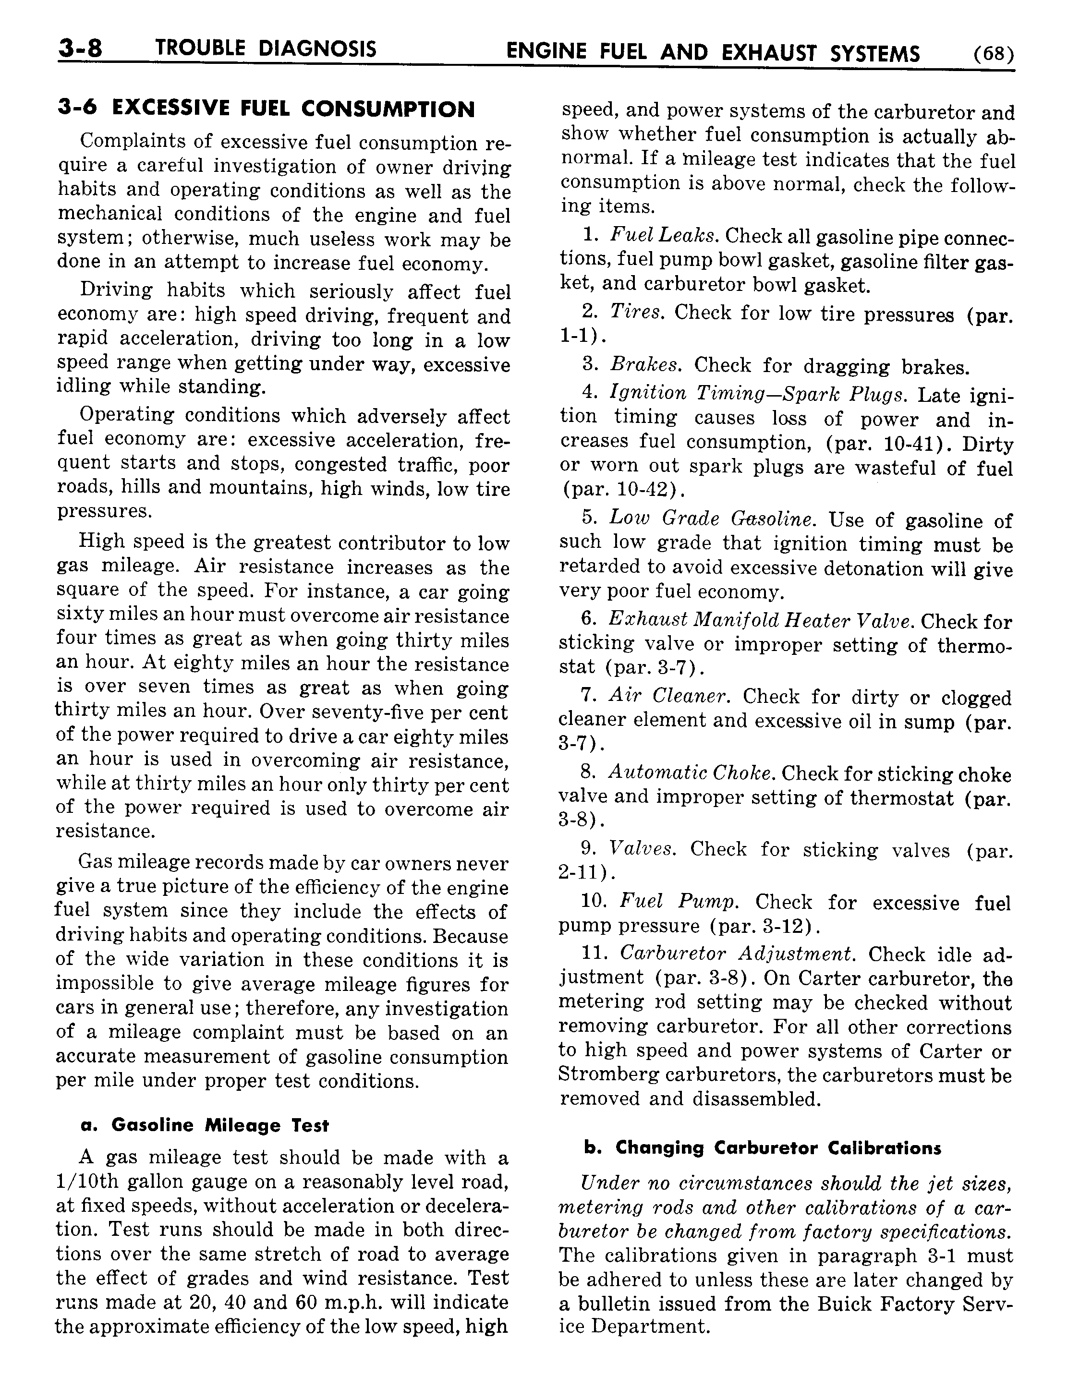 n_04 1954 Buick Shop Manual - Engine Fuel & Exhaust-008-008.jpg